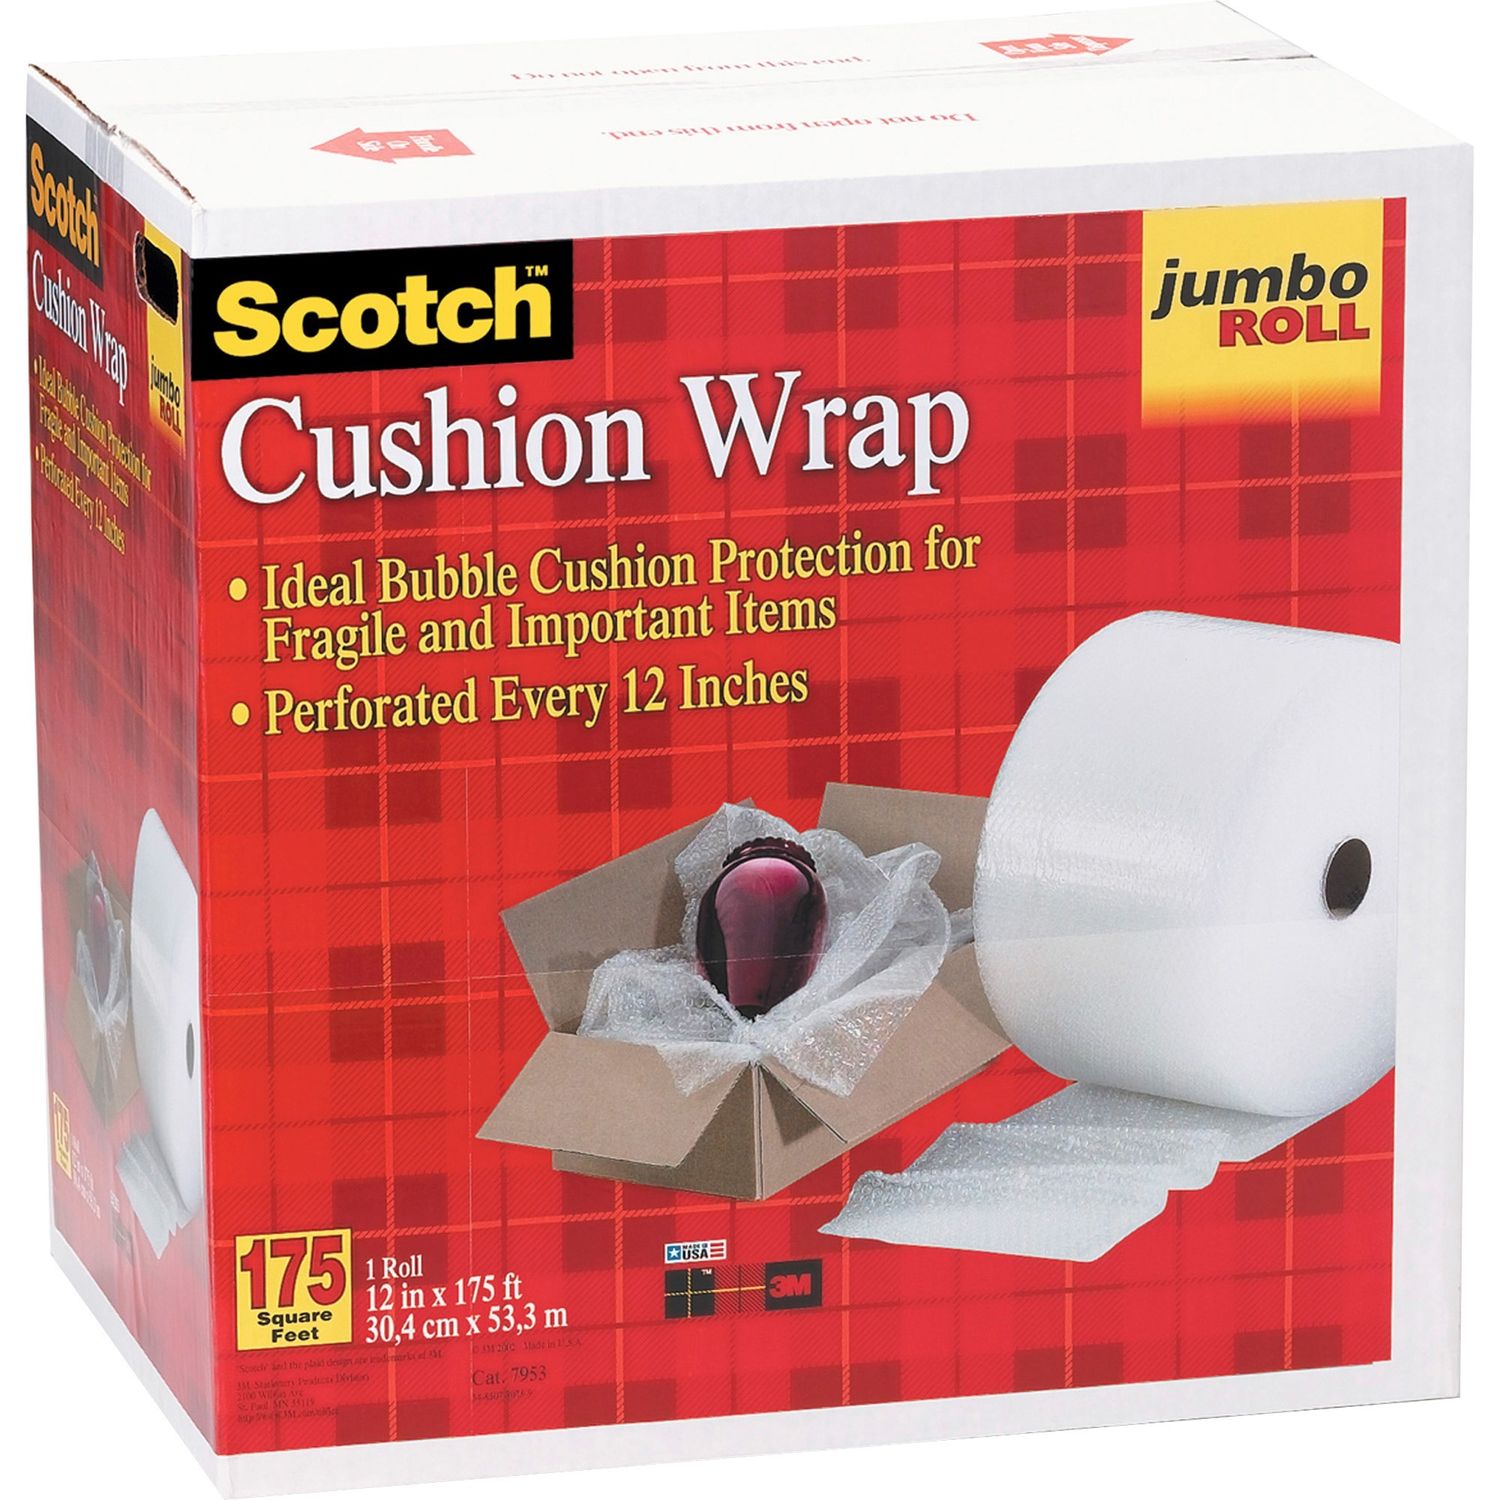 Jumbo Roll Cushion Wrap by 3M MMM7953